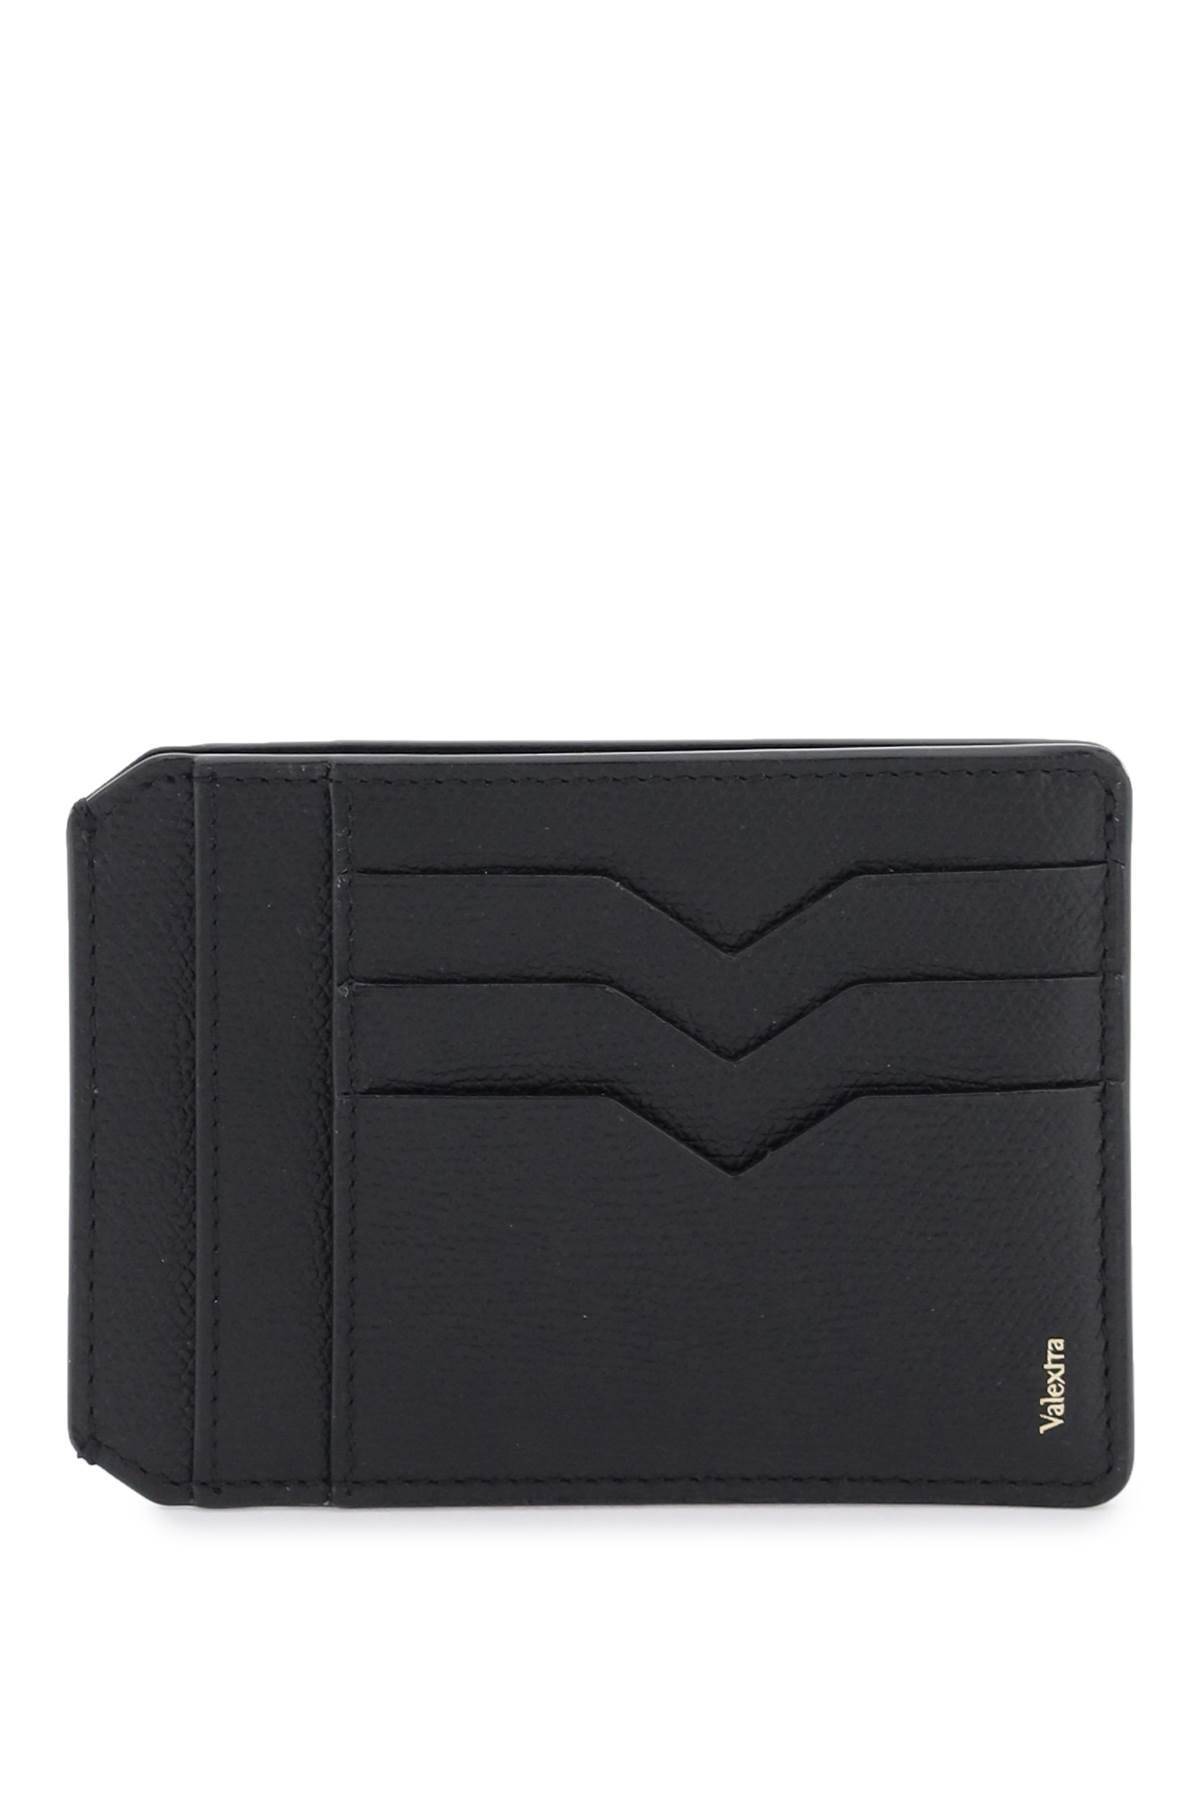 VALEXTRA leather card holder